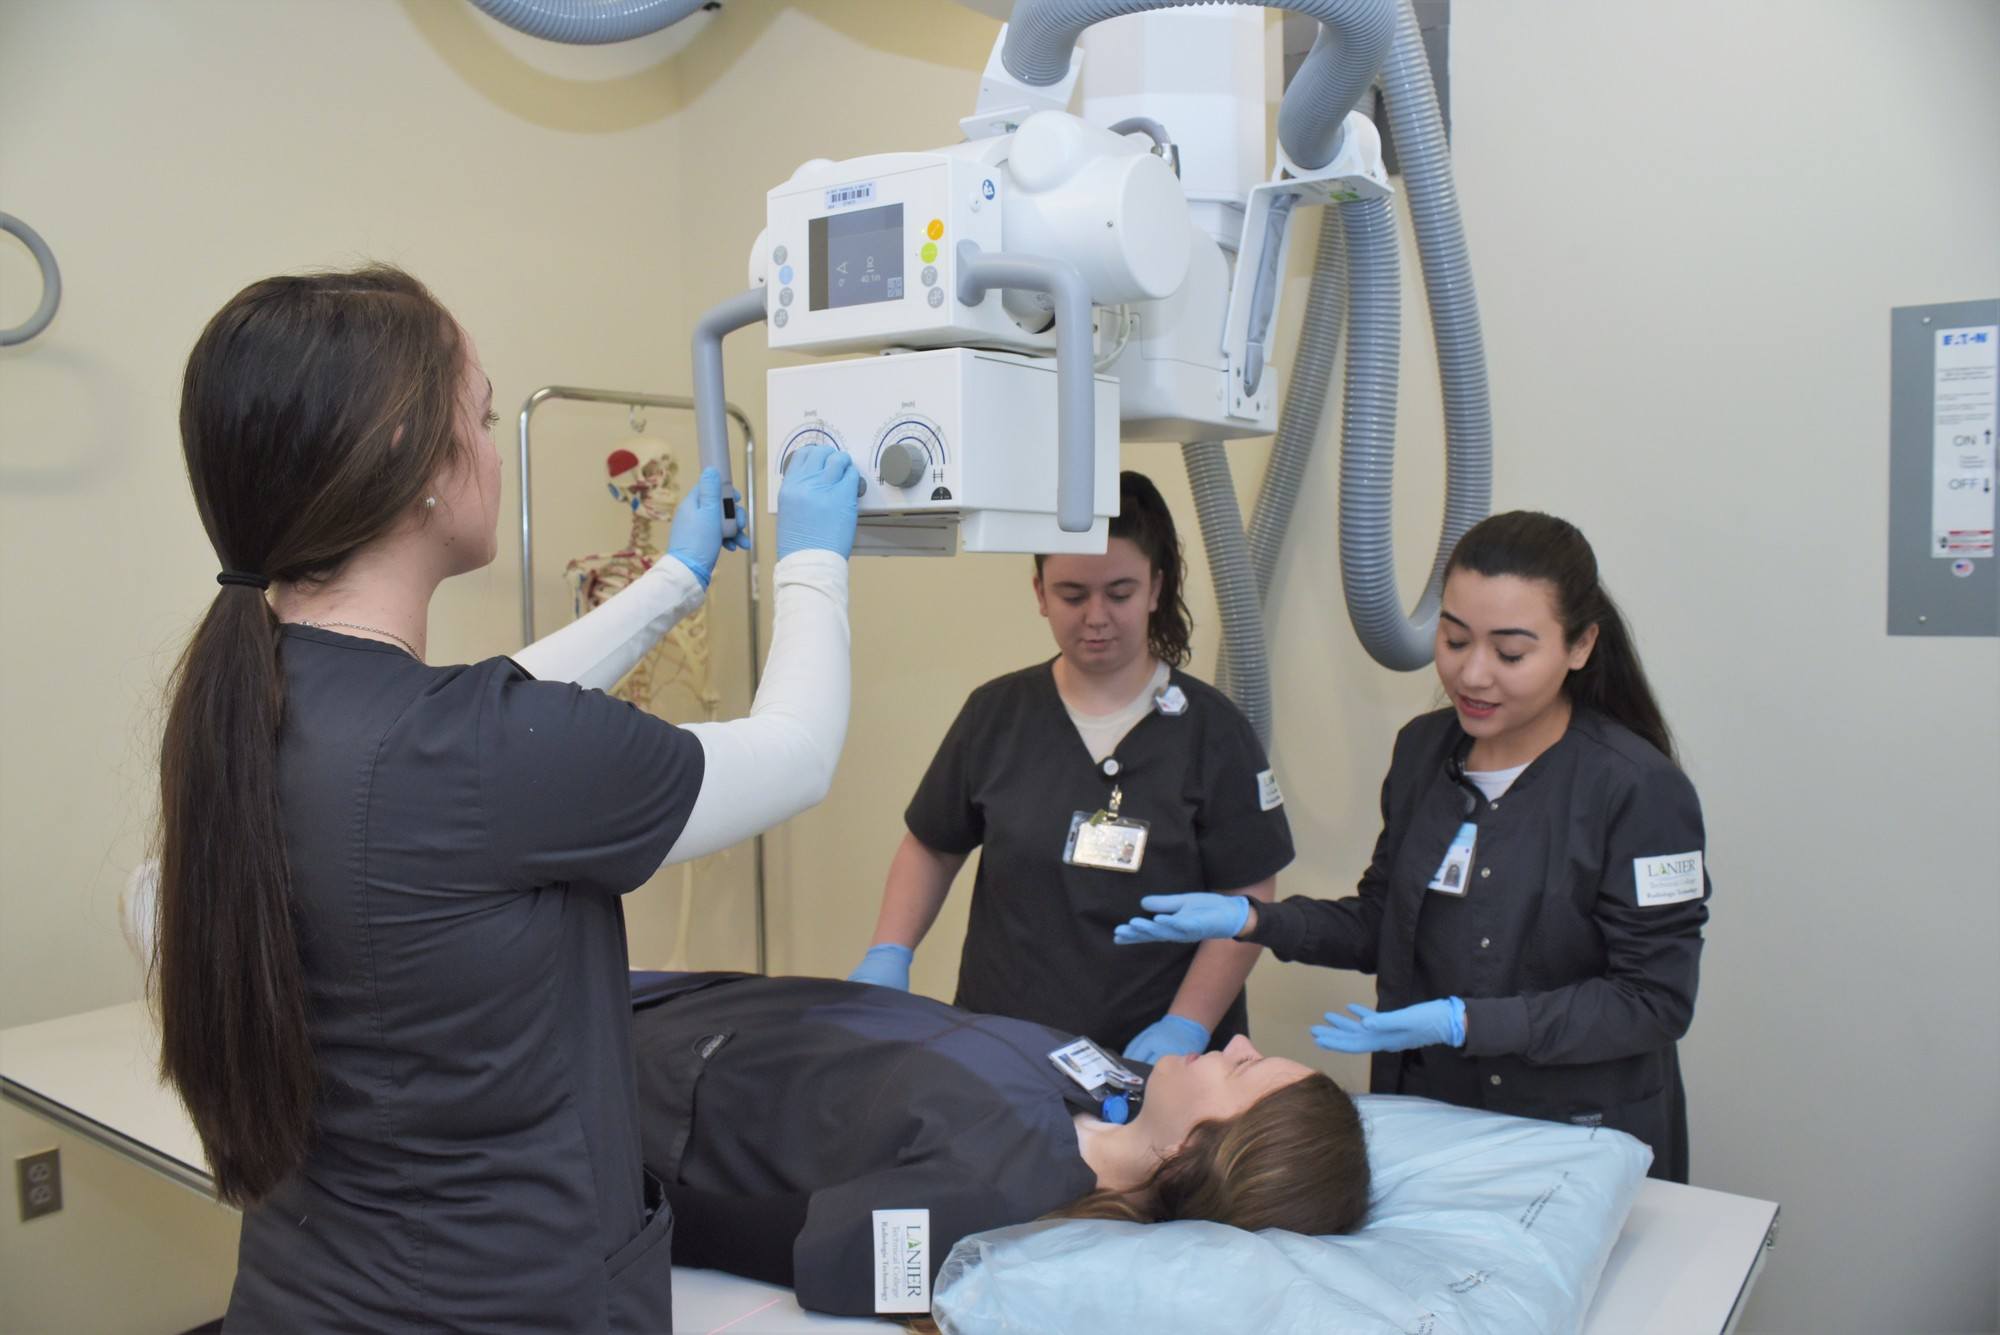 Radiologic Technology students using equipment